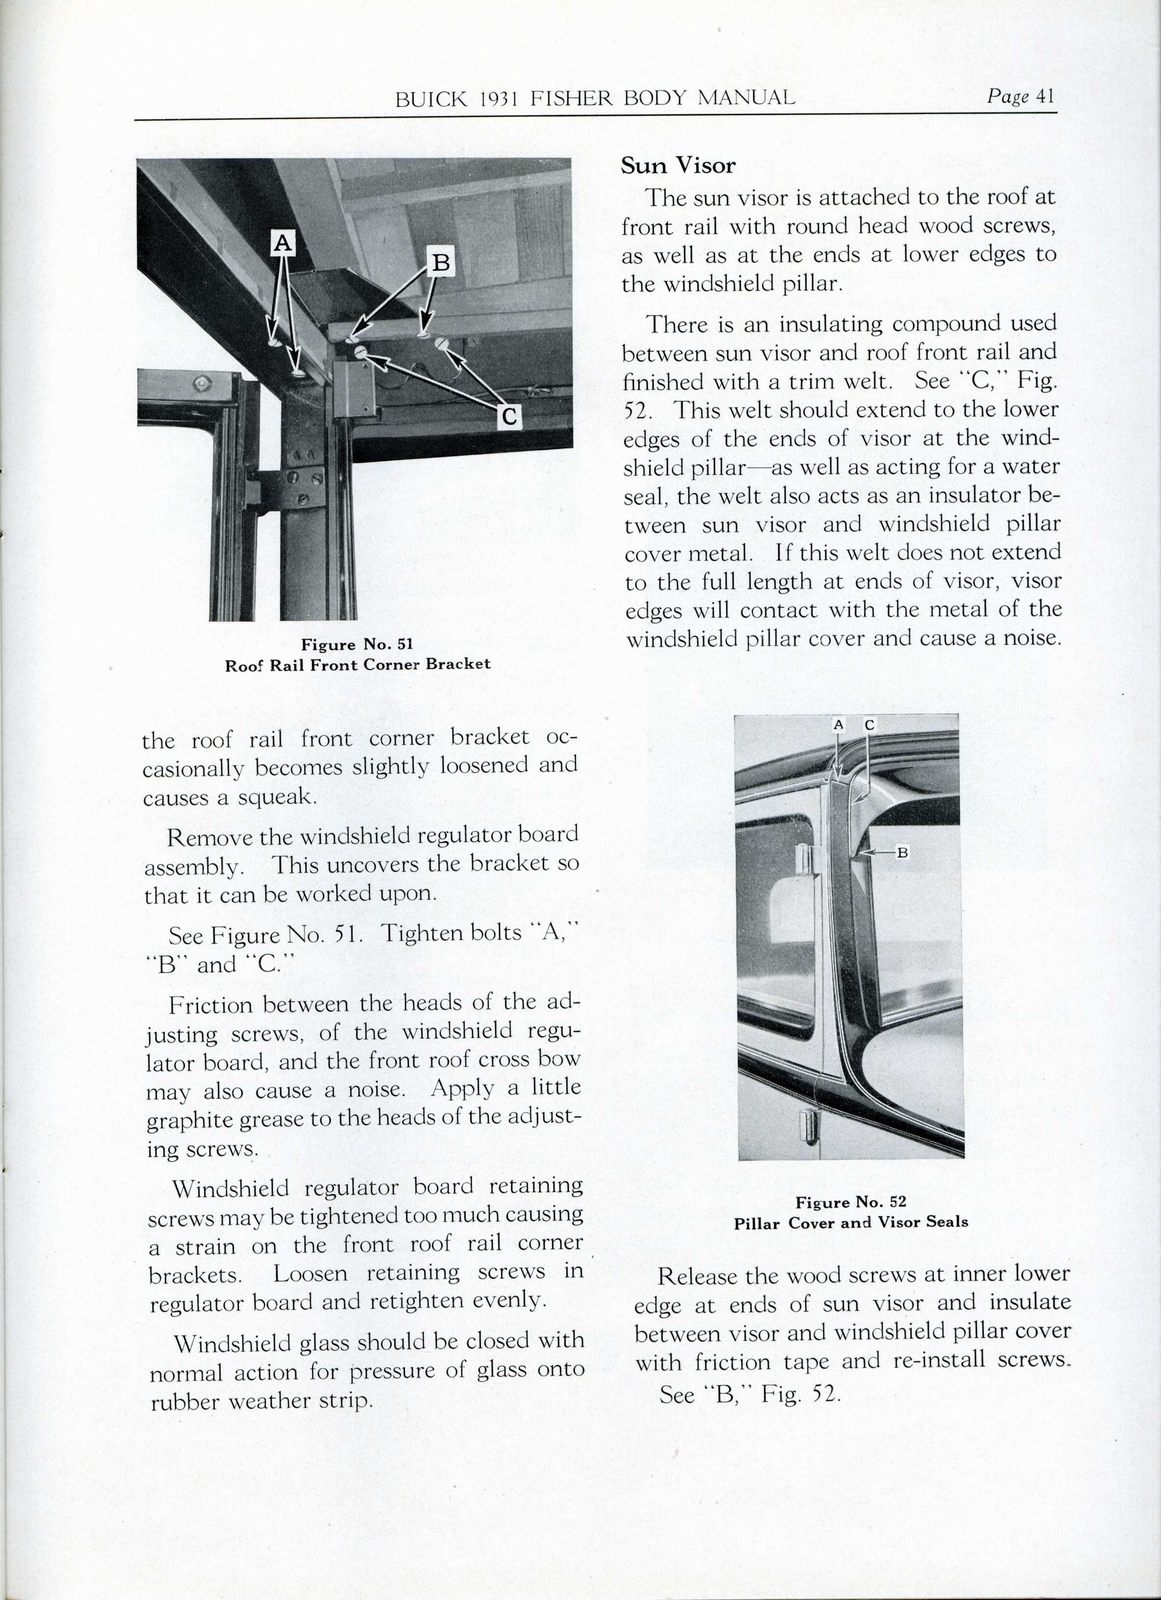 n_1931 Buick Fisher Body Manual-41.jpg